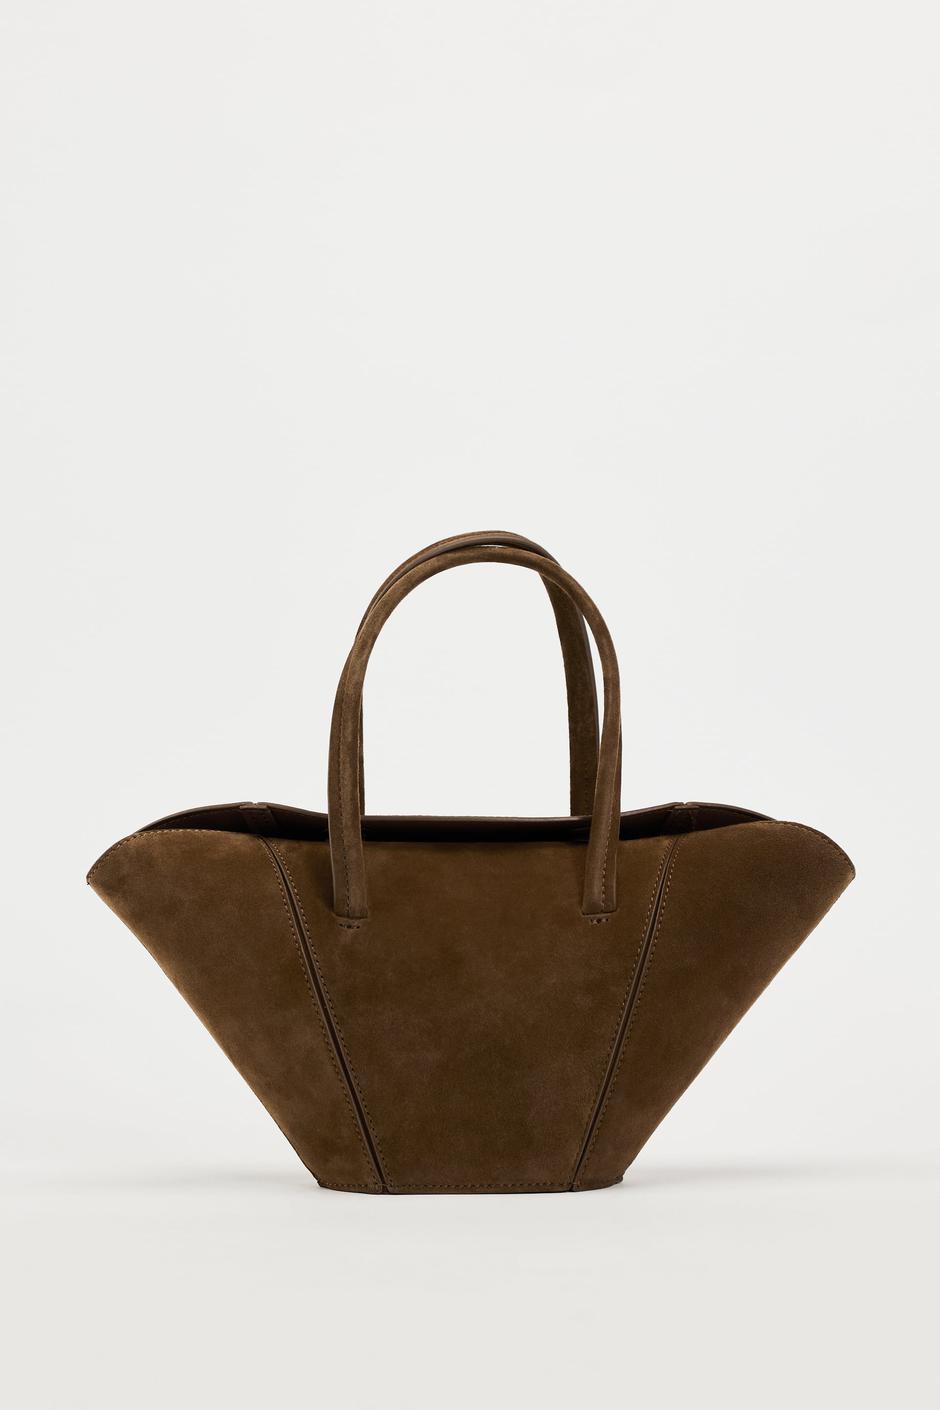 Foto: Zara, smeđa torba od brušene kože (79,95 eura) | Autor: zara